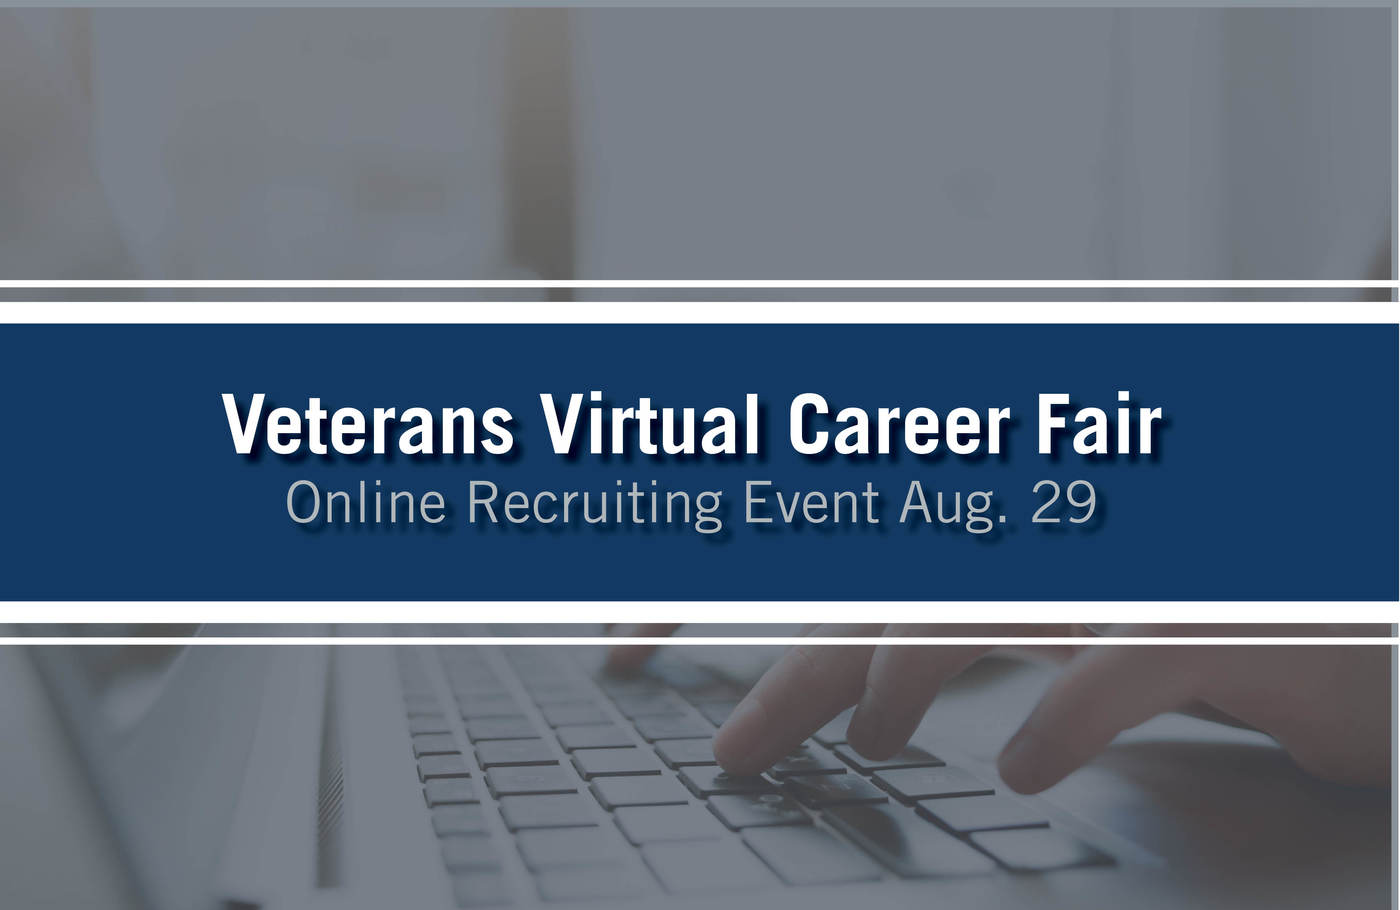 veterans virtual career fair on august 29th